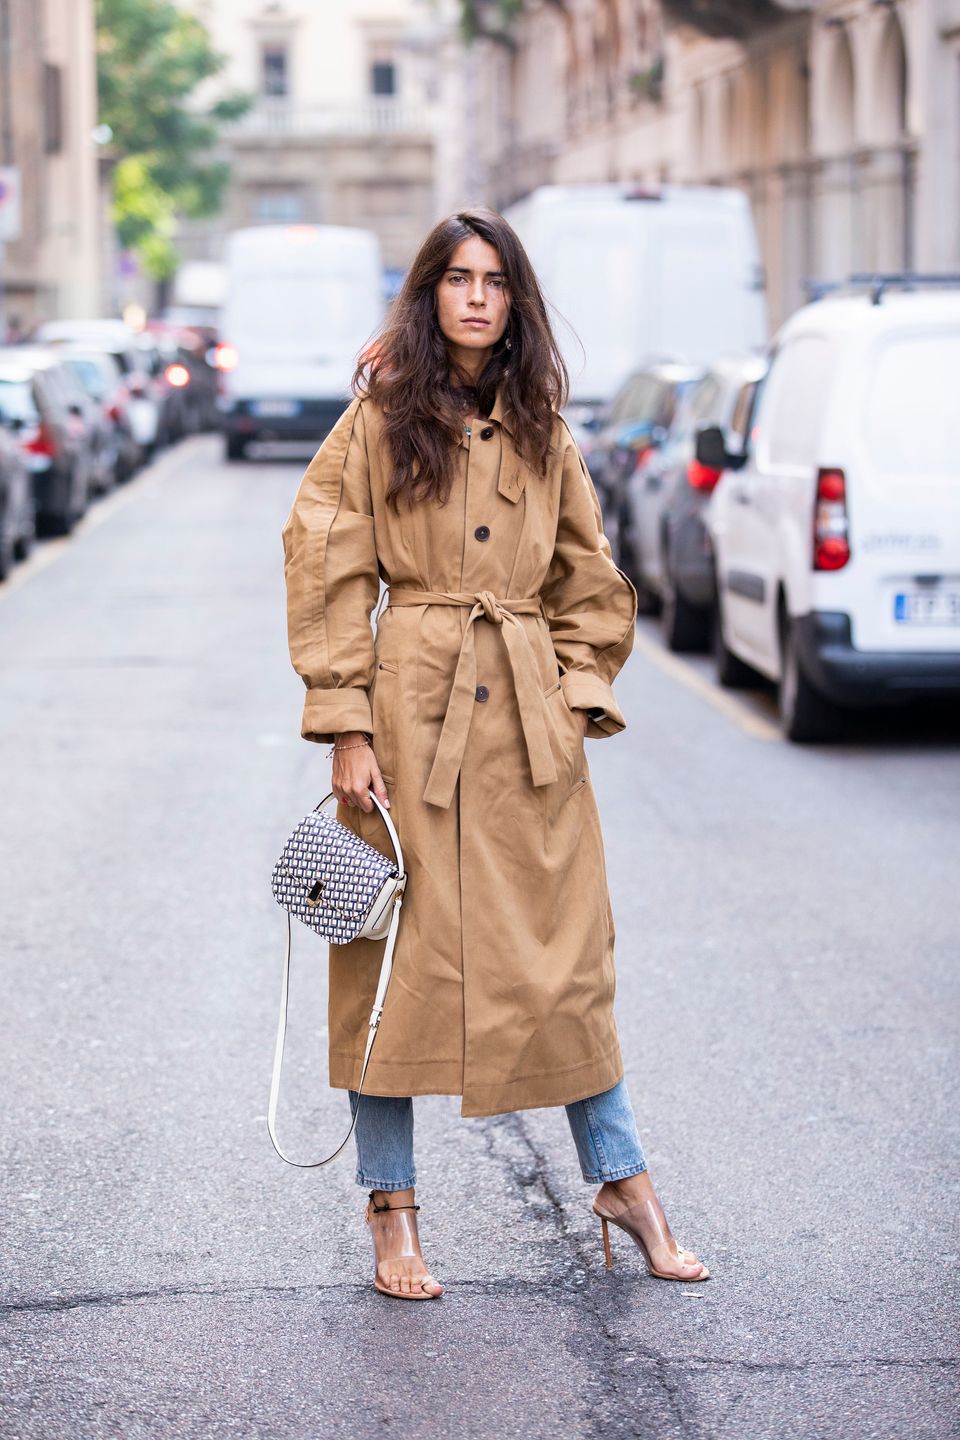 31 Italian Street Style Photos To Inspire Your Wardrobe